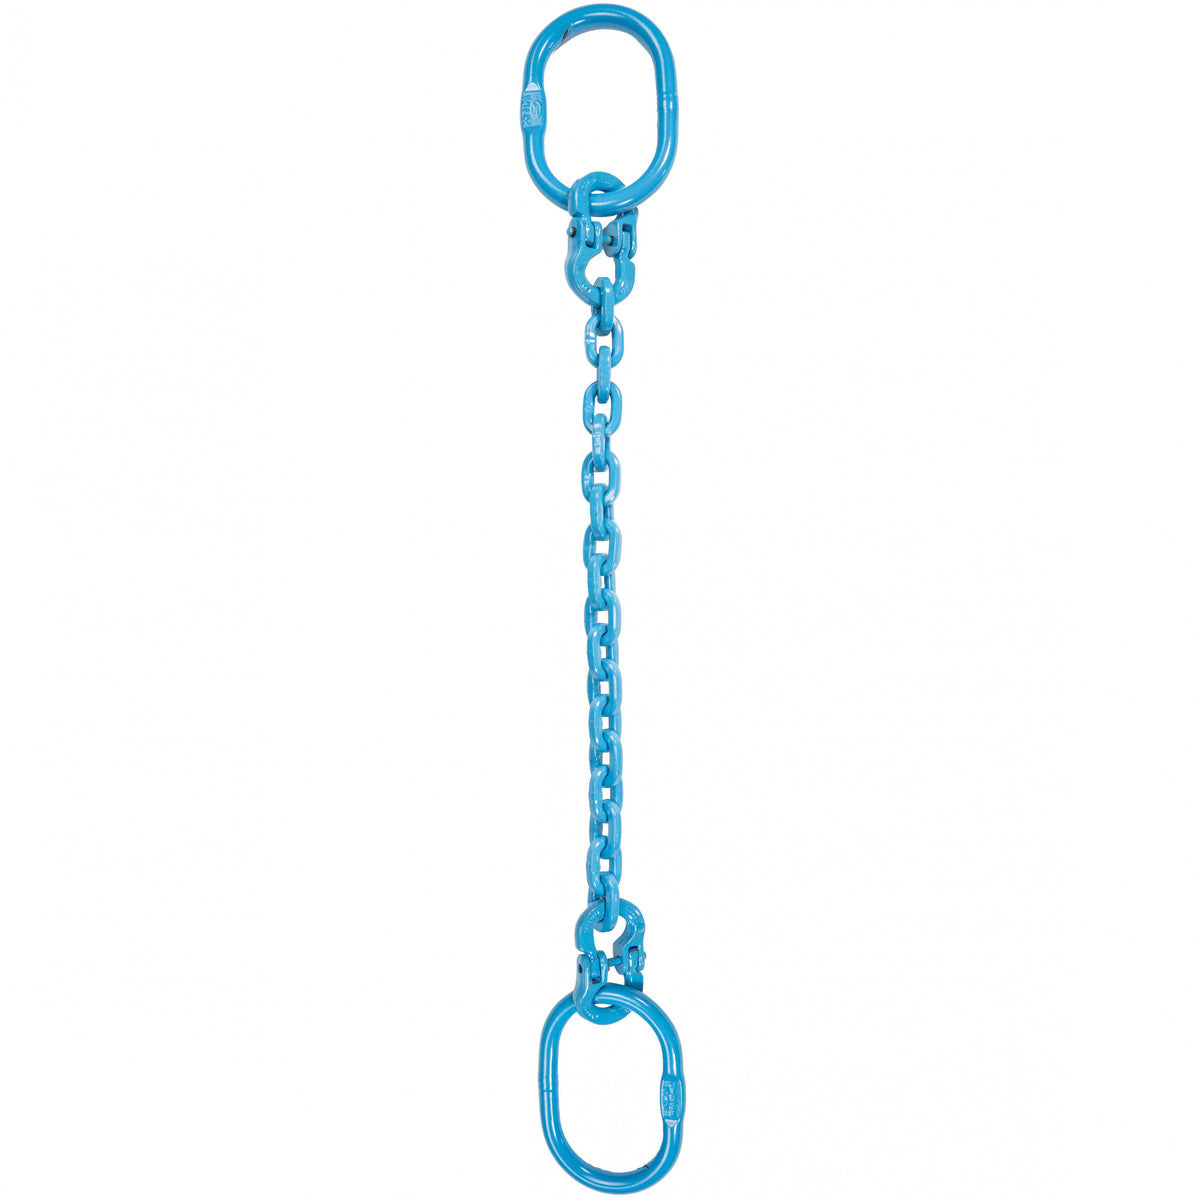 9/32" x 6' - Pewag Single Leg Chain Sling w/ Oblong Master Links - Grade 120